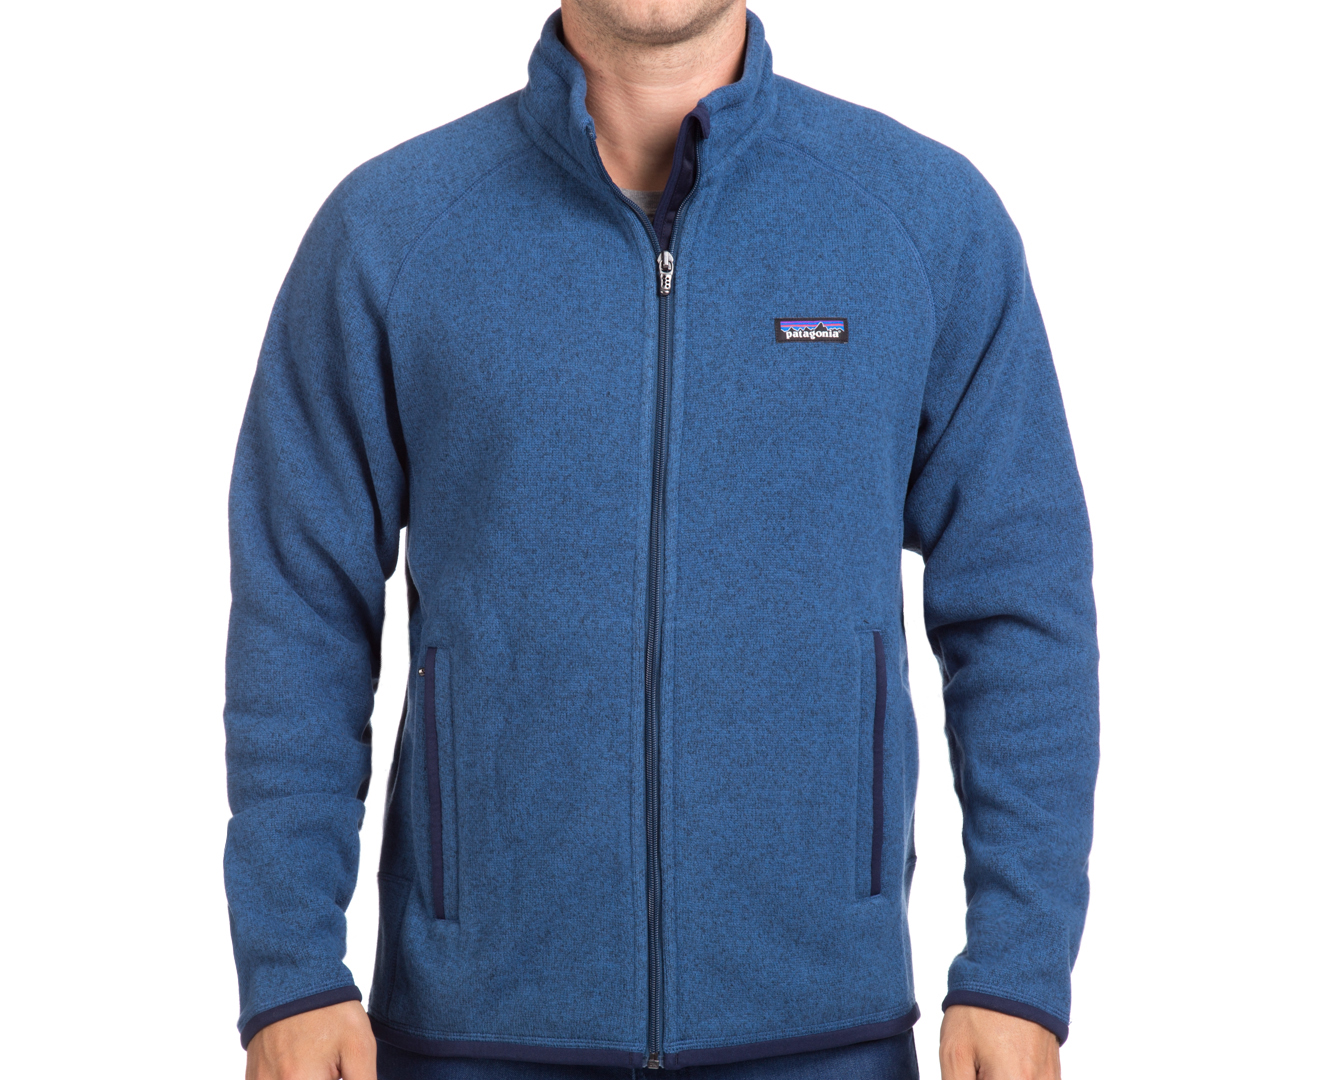 Patagonia Men's Better Sweater Jacket - Blue Navy | Catch.com.au